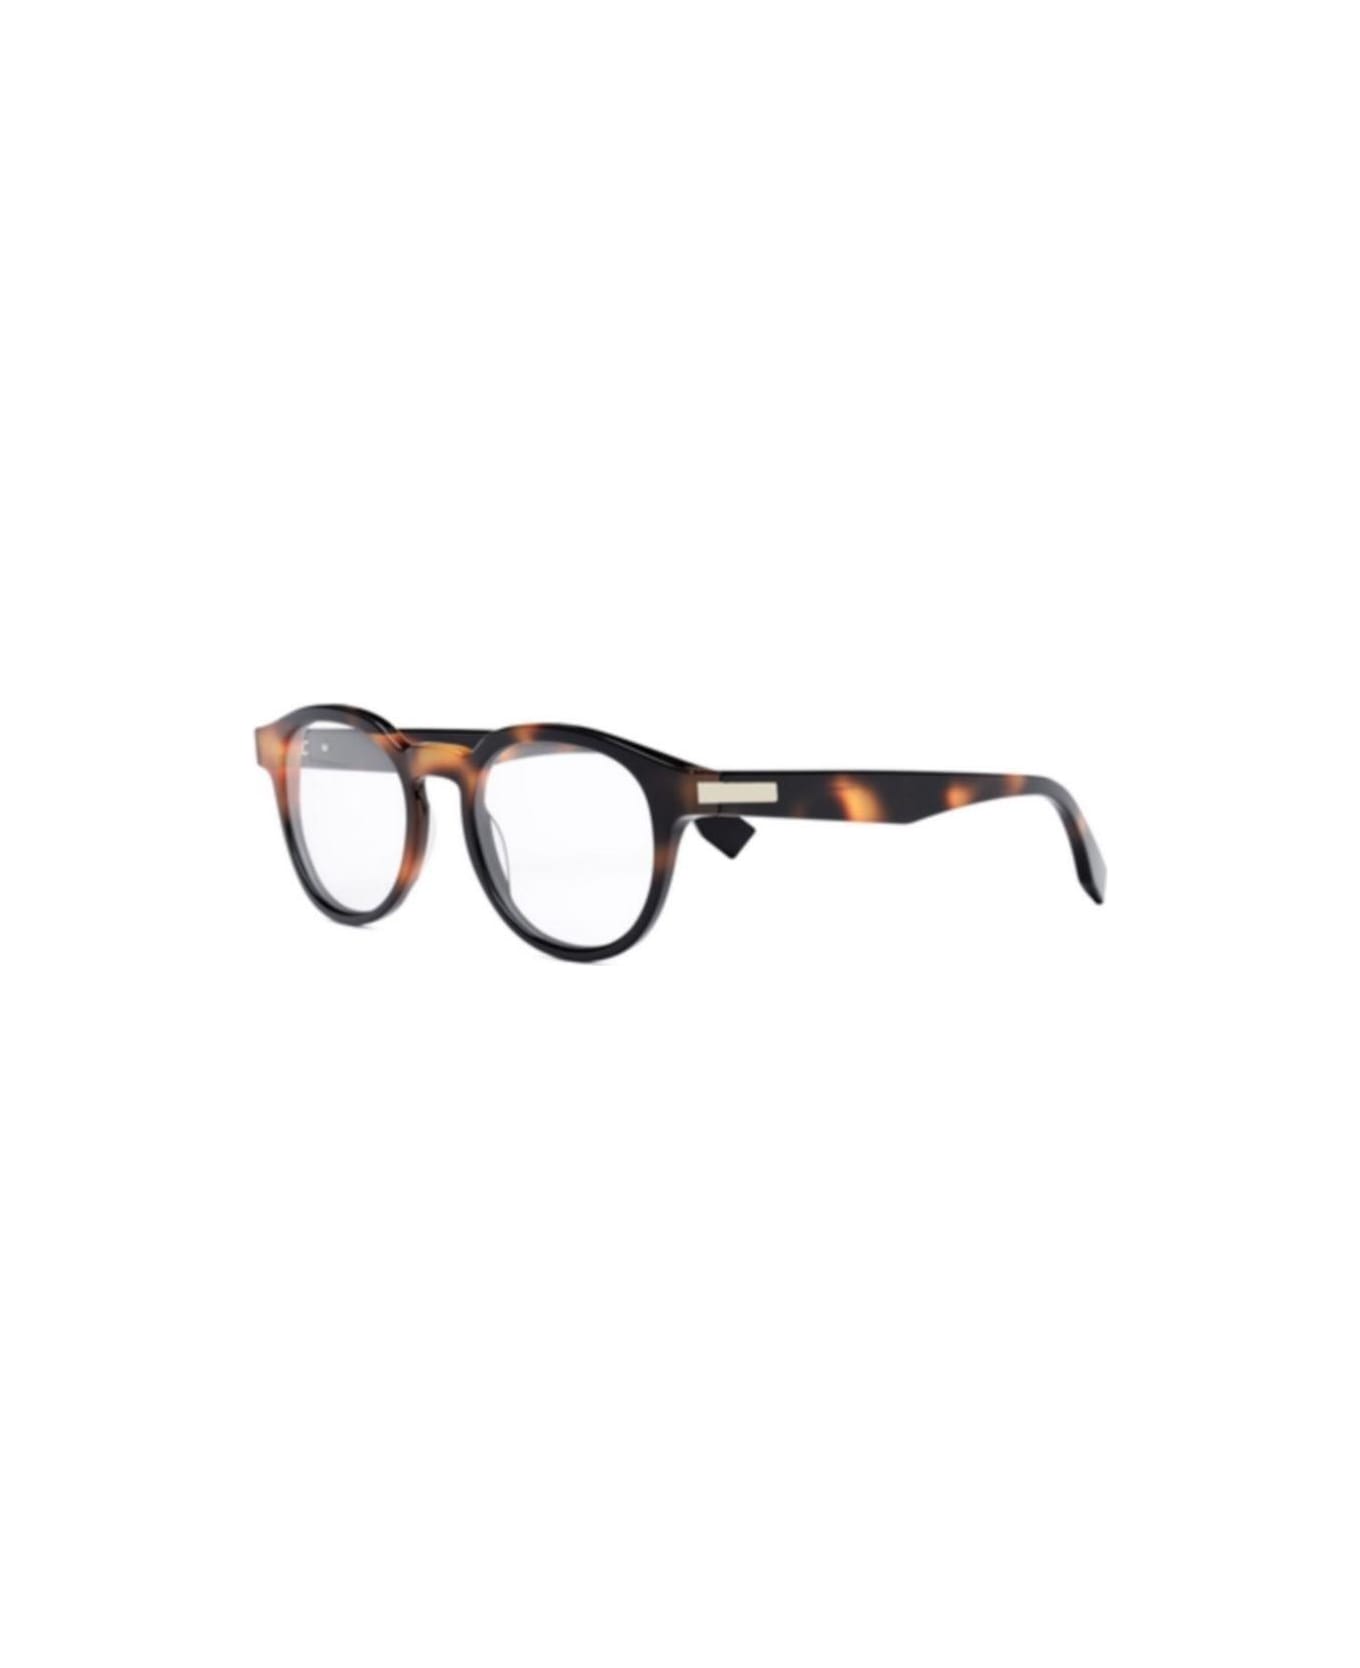 Fendi Eyewear Round Frame Glasses - 053